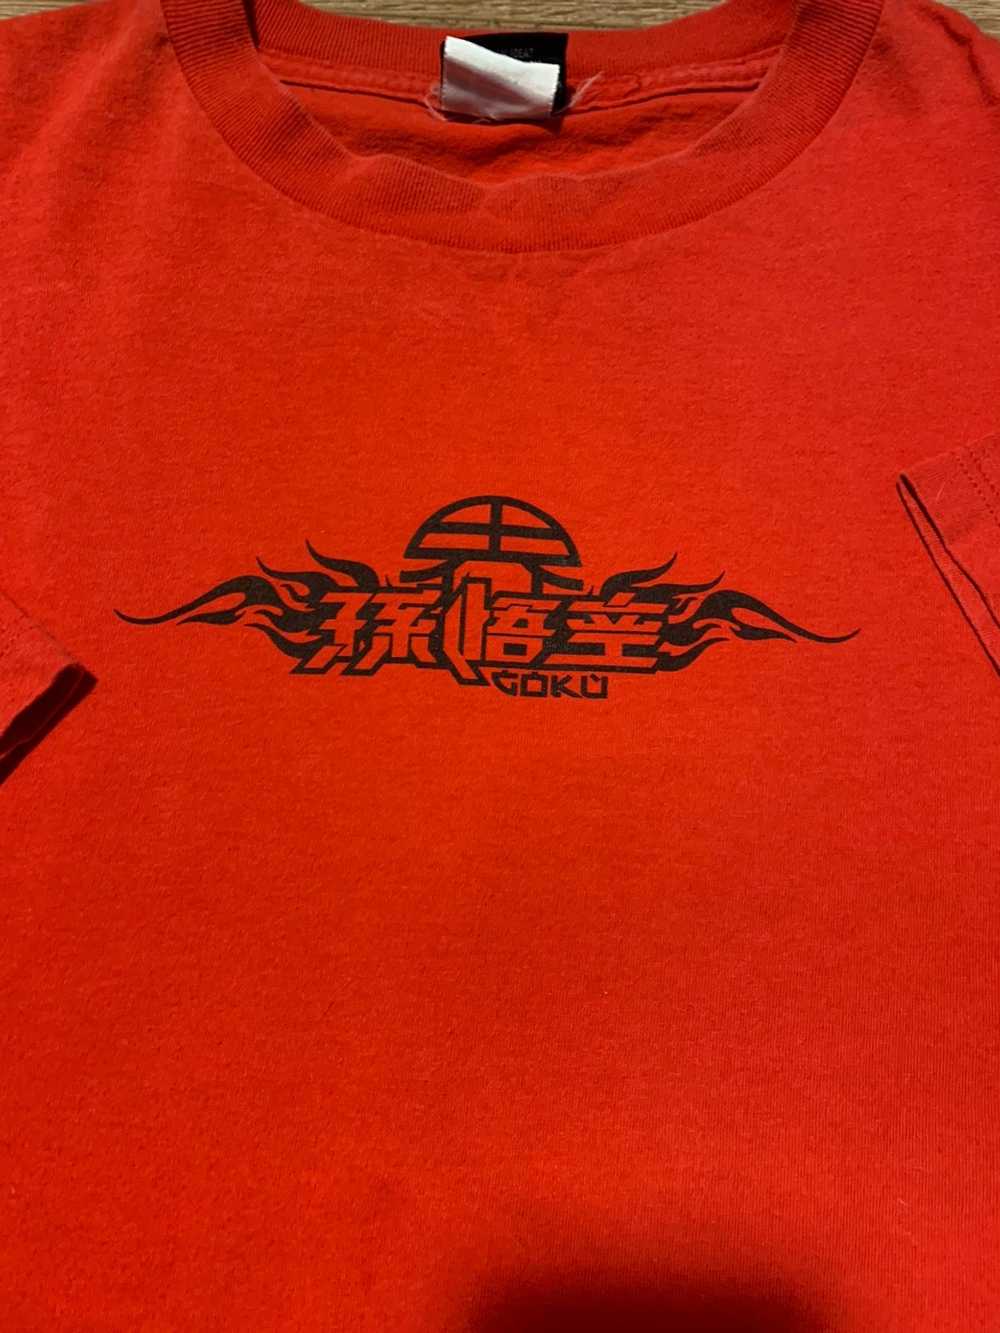 Vintage 2001 DBZ Son Goku T Shirt - image 2